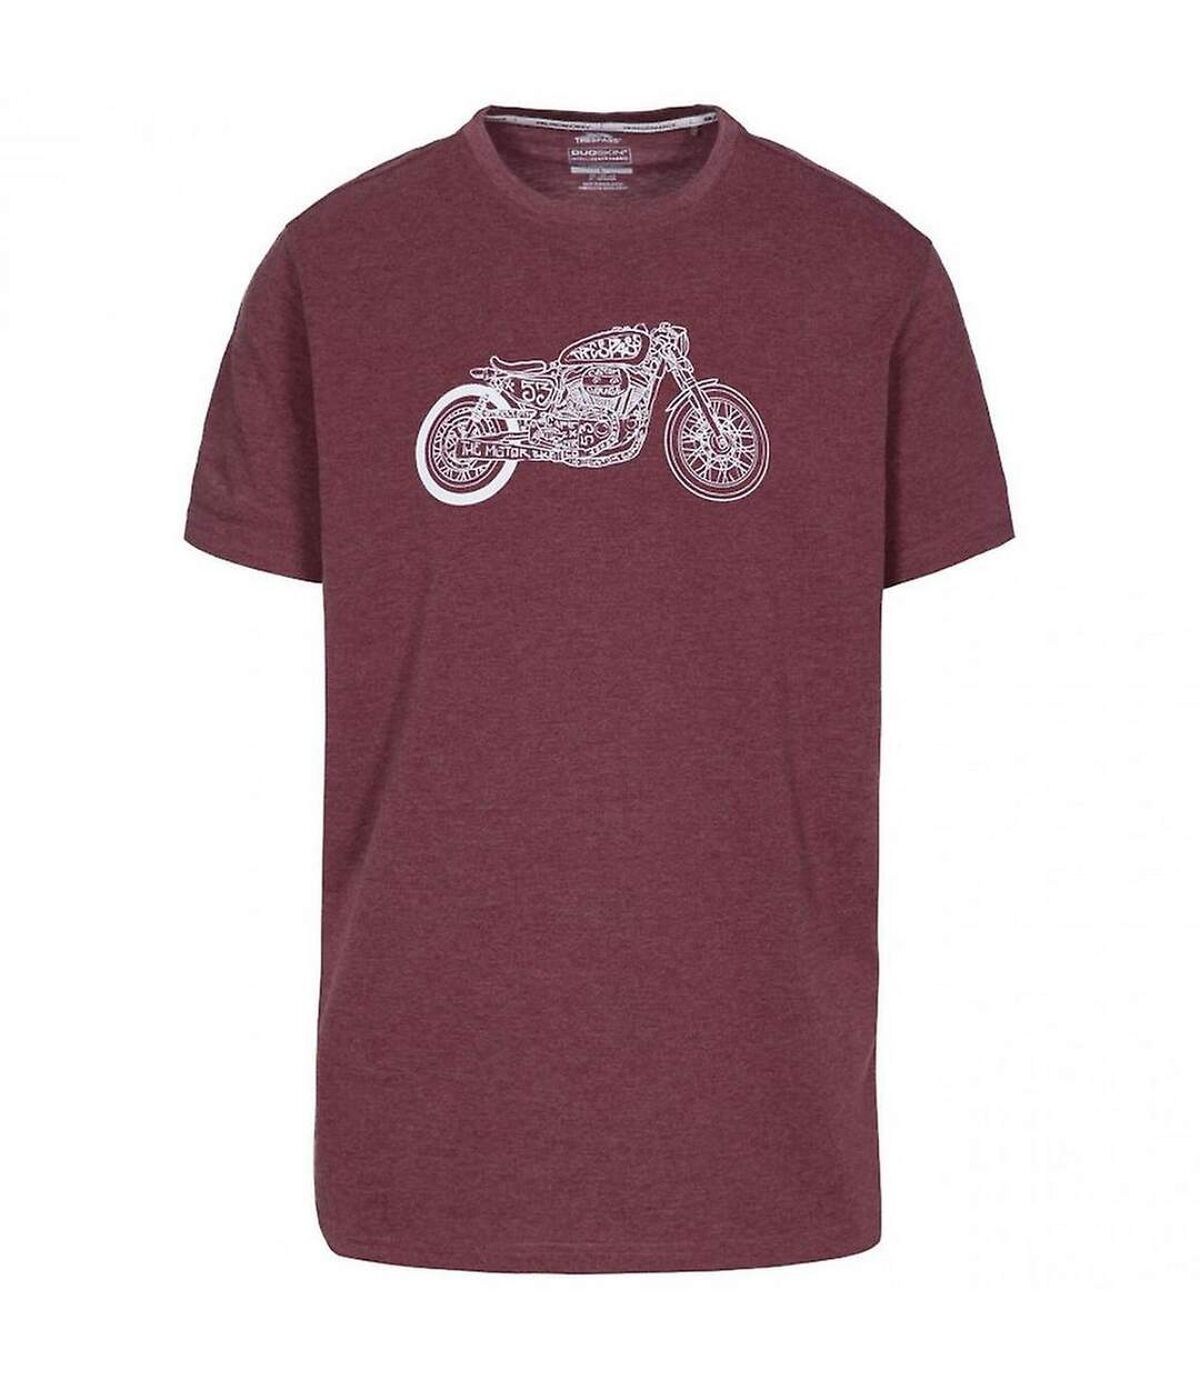 Trespass - T-shirt MOTO - Hommes (maron) - UTTP4297